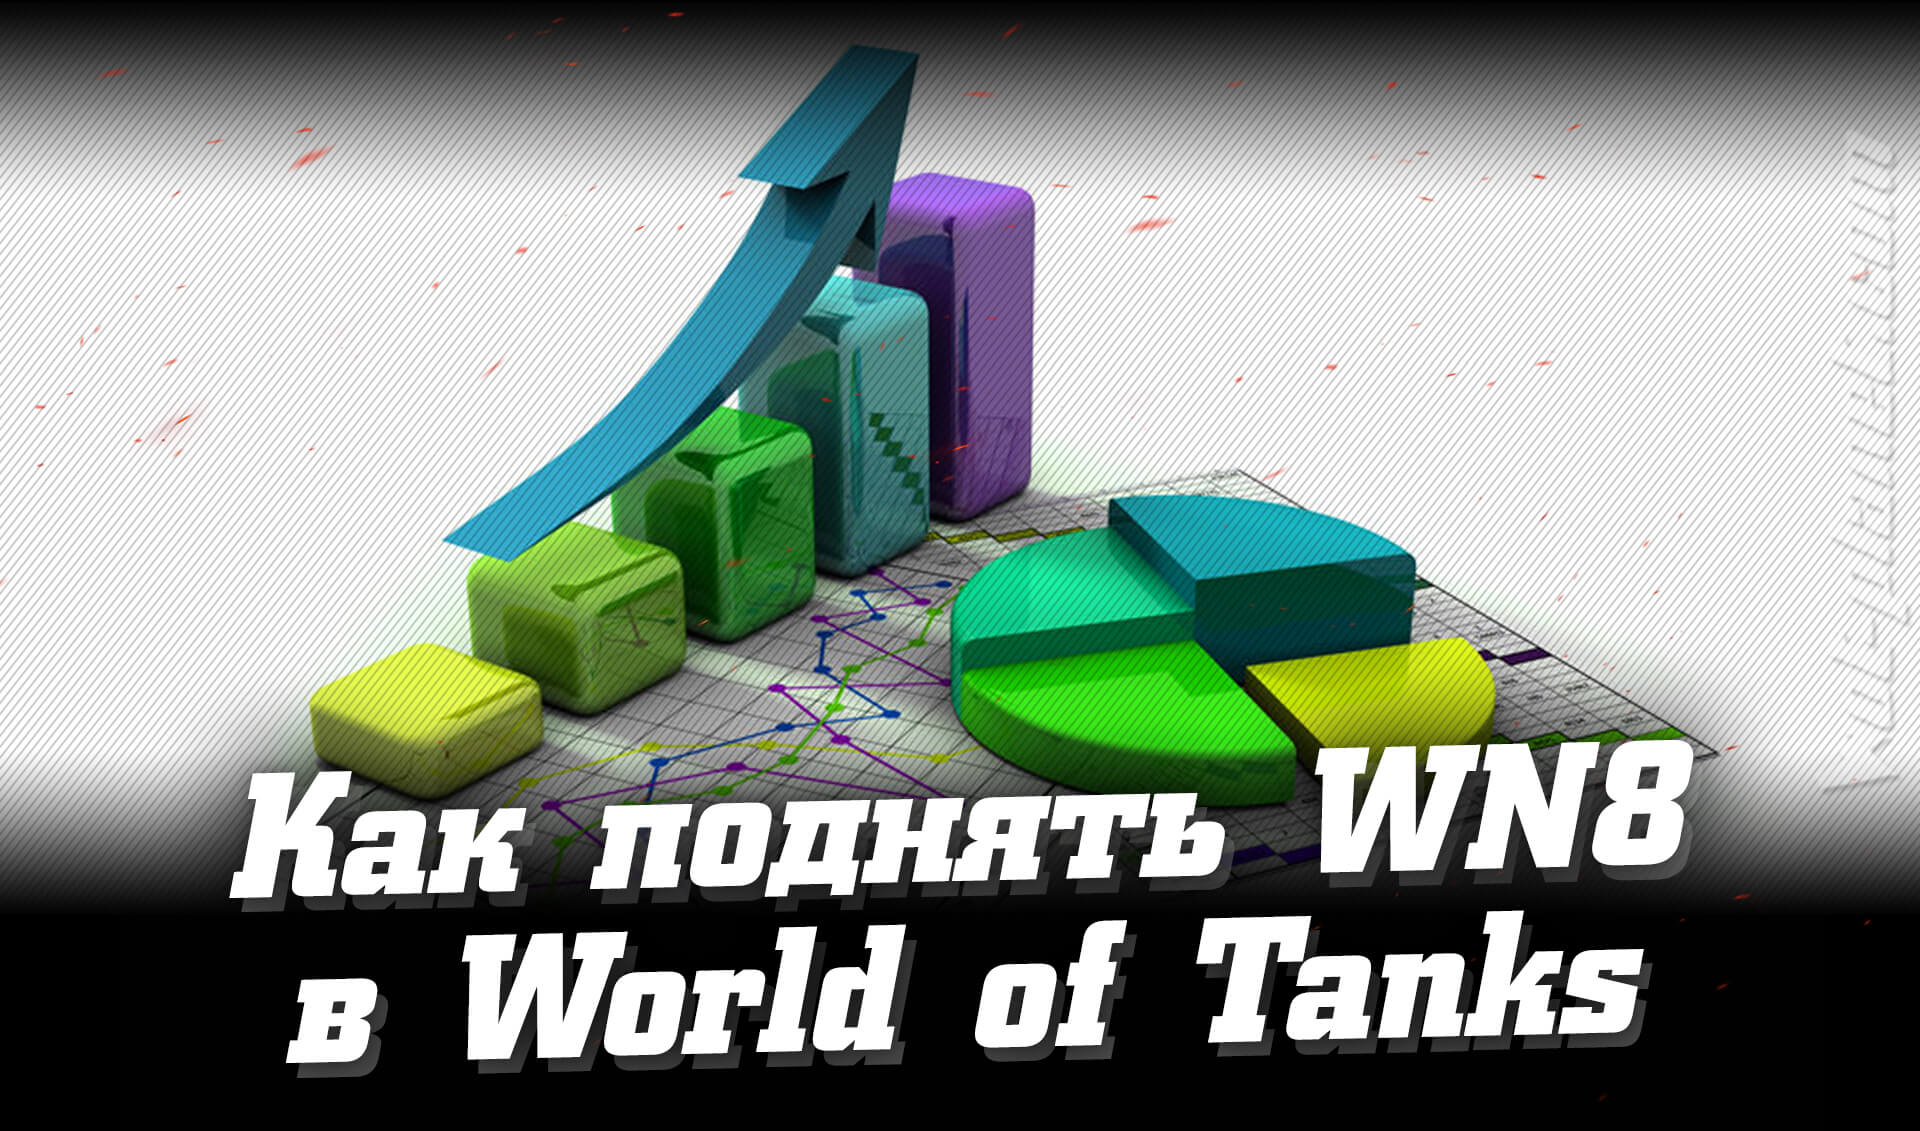 World of Tanks vn8 и эффективность игрока в World of Tanks